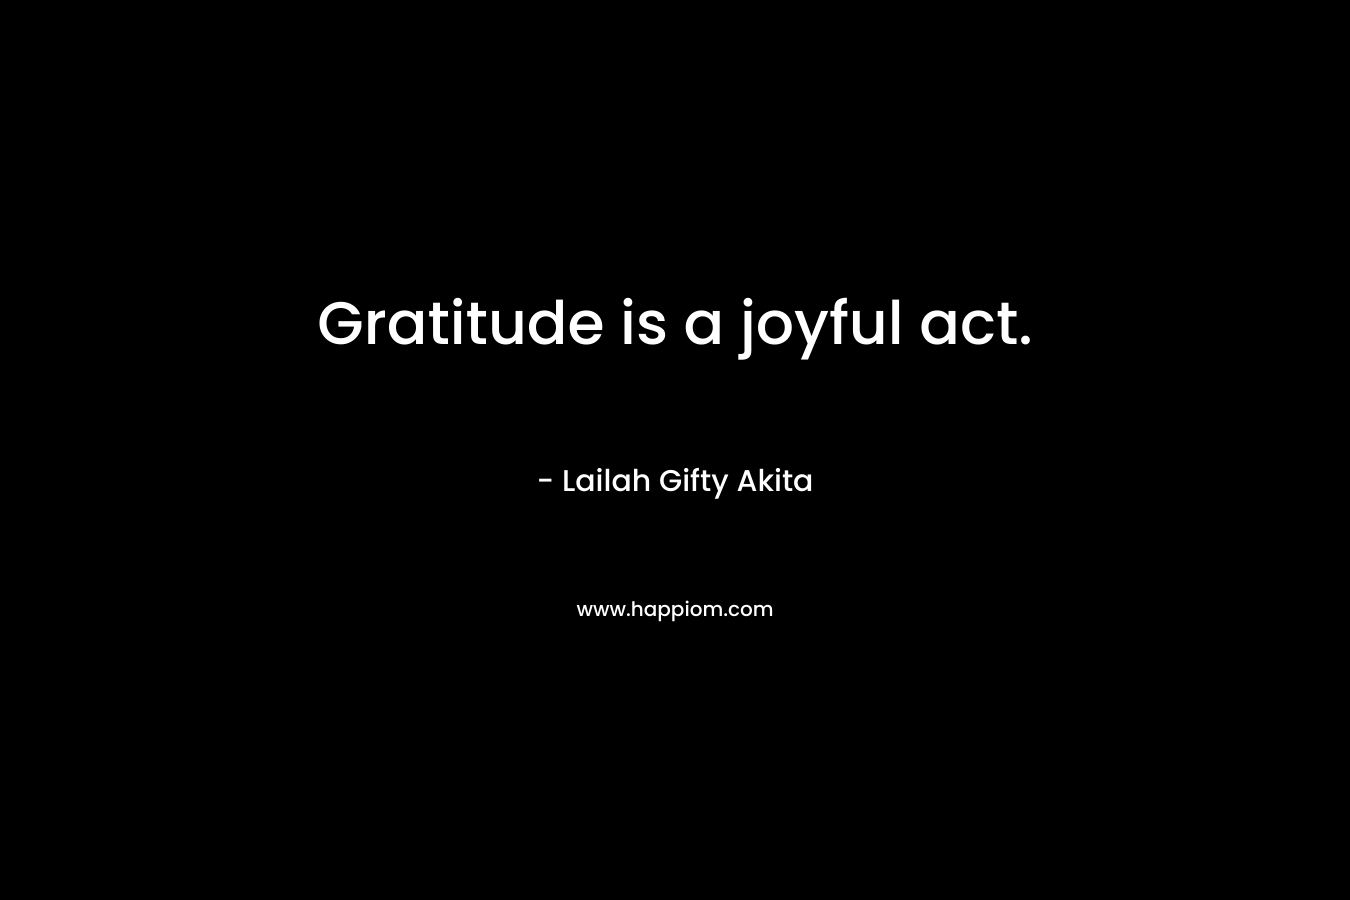 Gratitude is a joyful act.